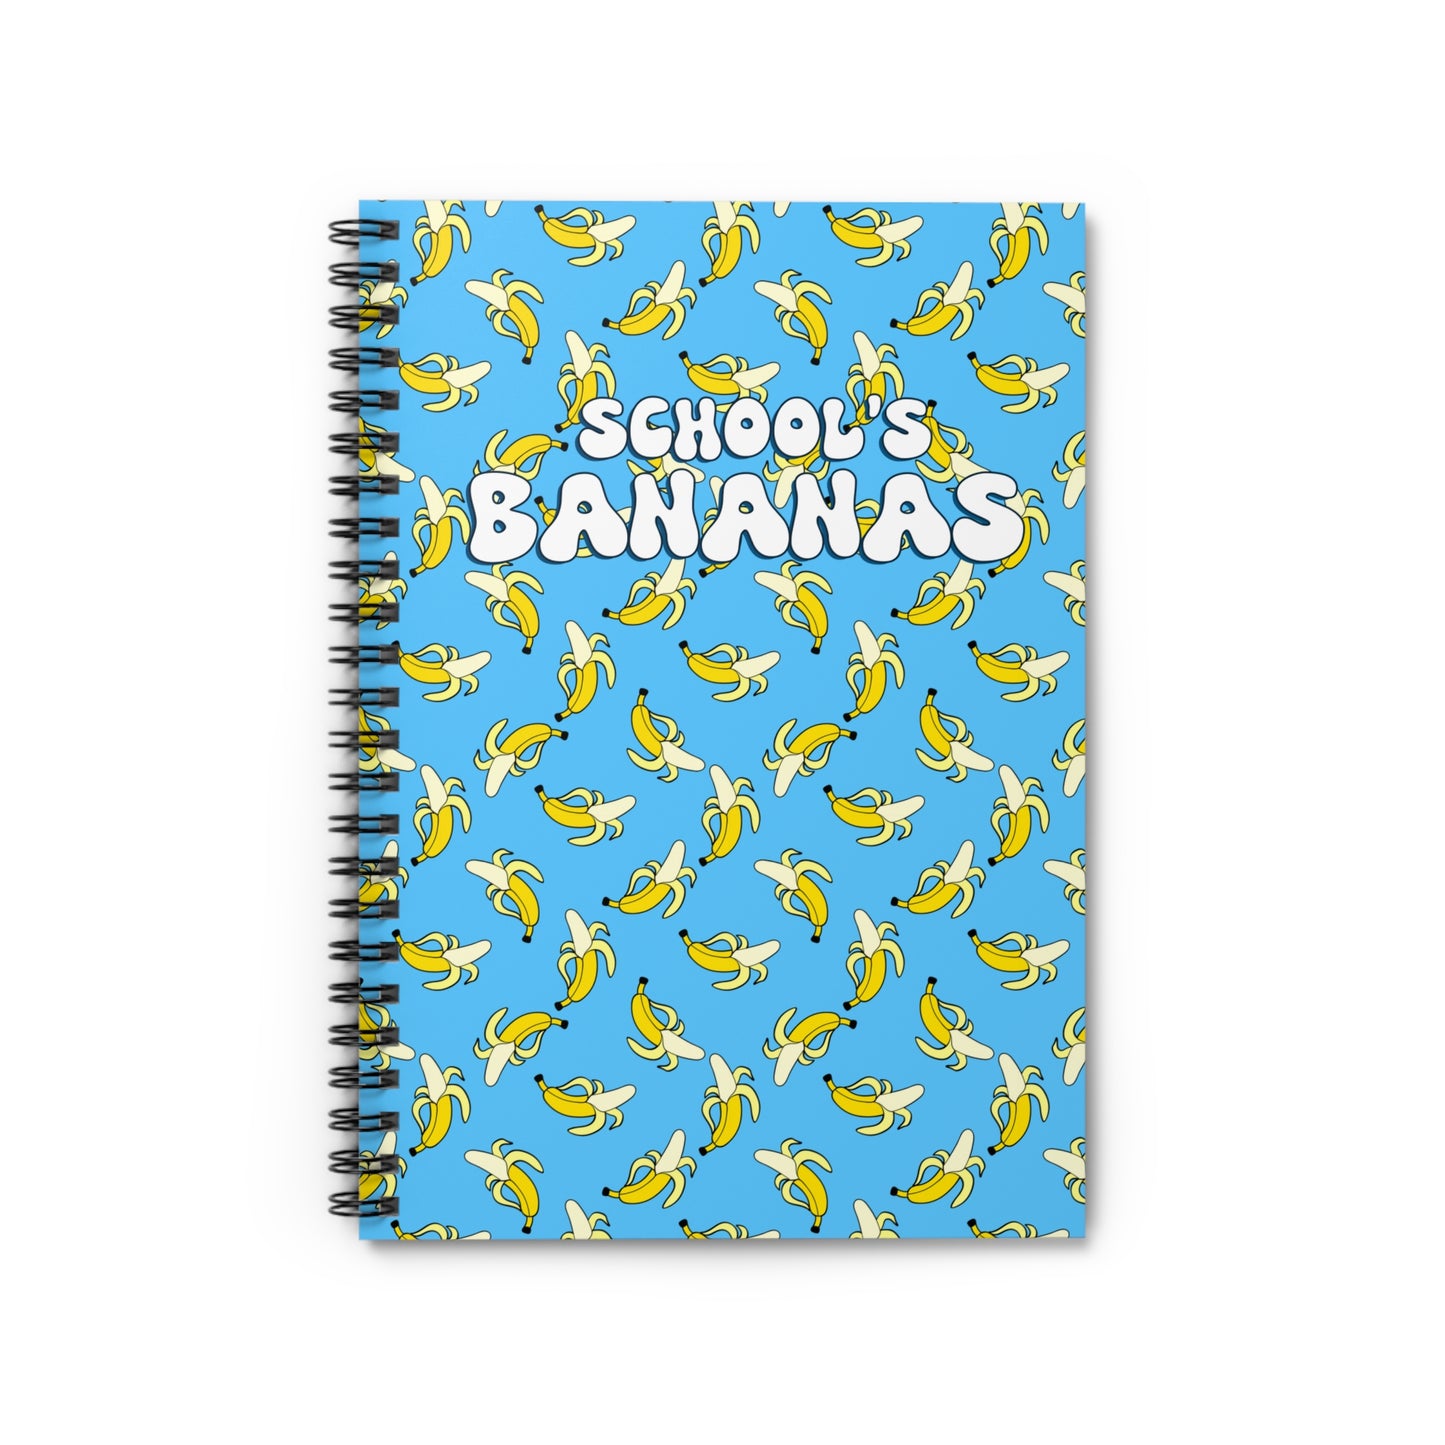 GU 'School's Banana's' Spiral Notebook